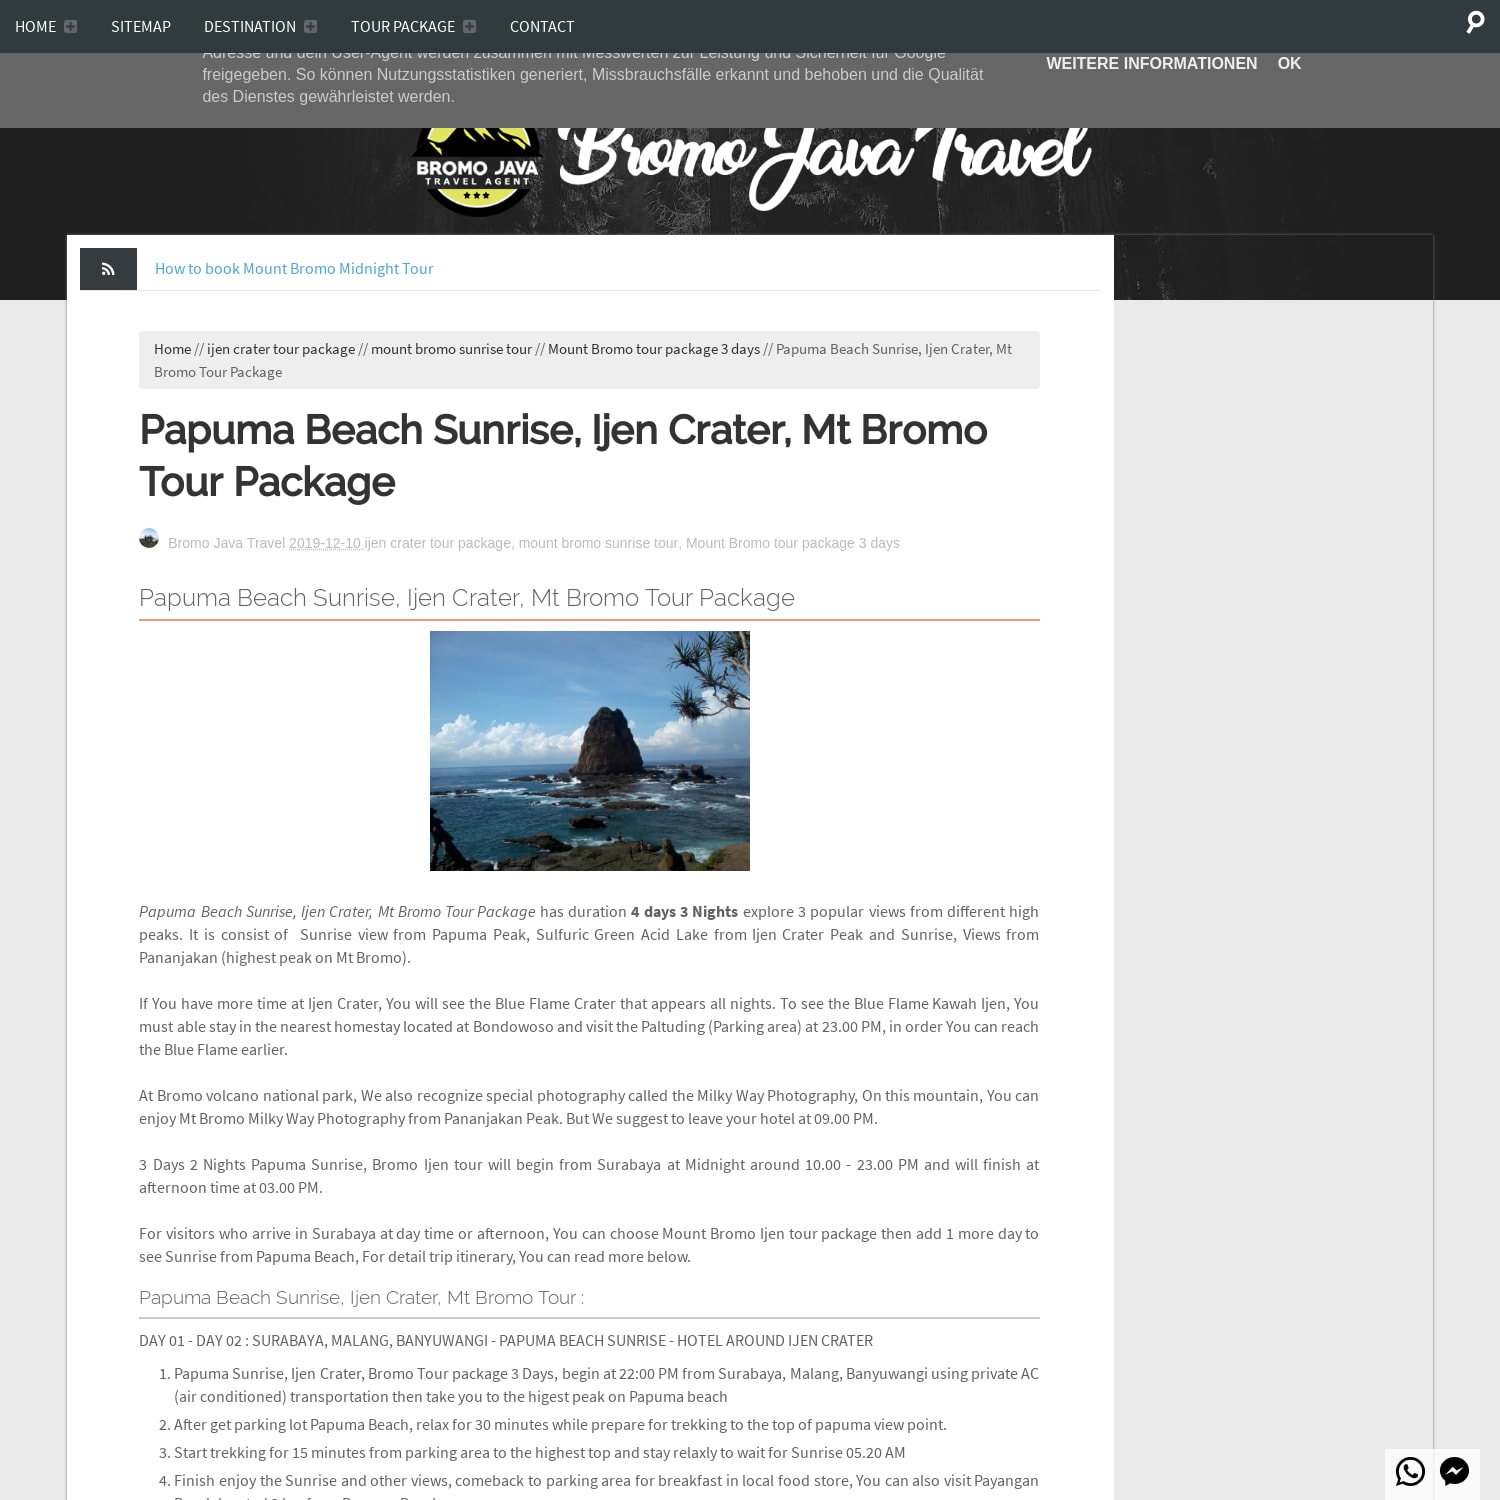 Papuma Beach Sunrise, Ijen Crater, Mt Bromo Tour Package